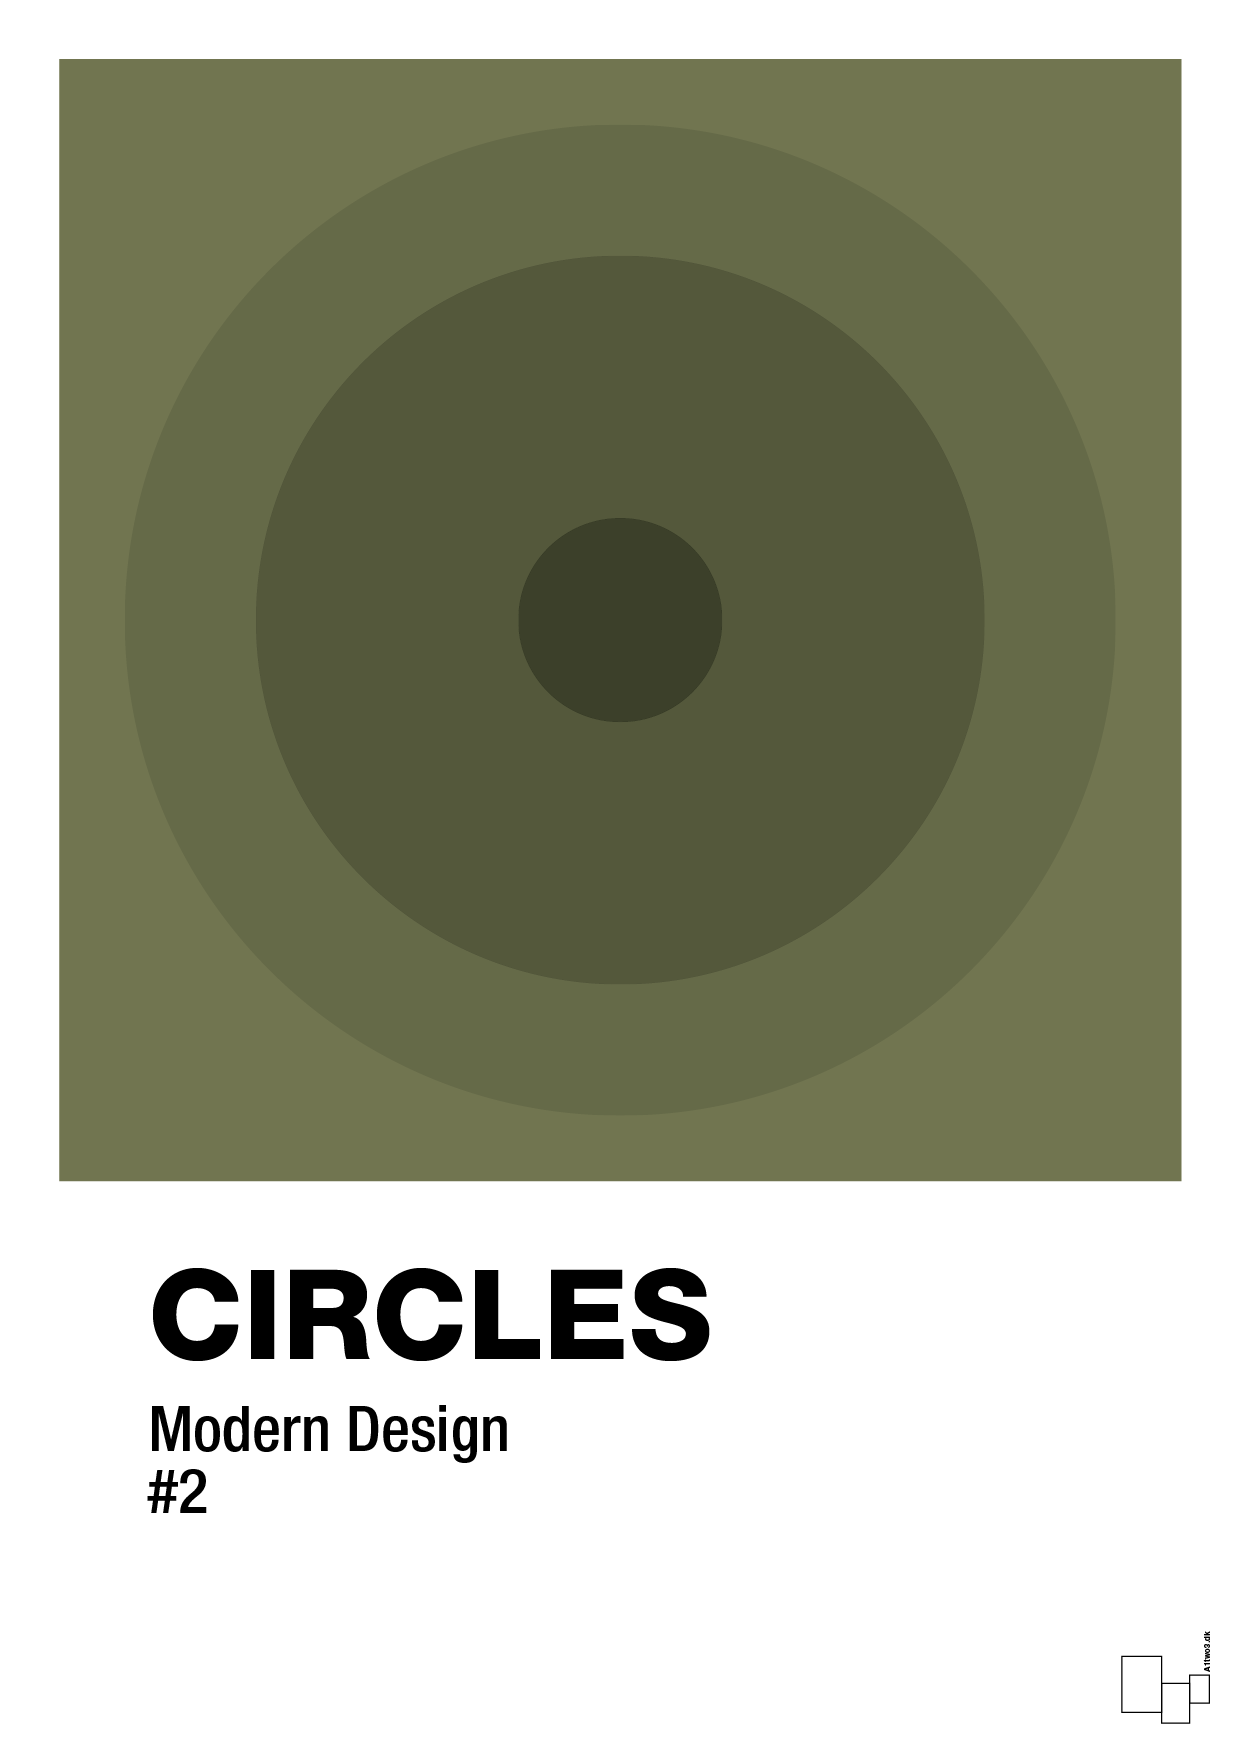 circles #2 - Plakat med Grafik i Secret Meadow